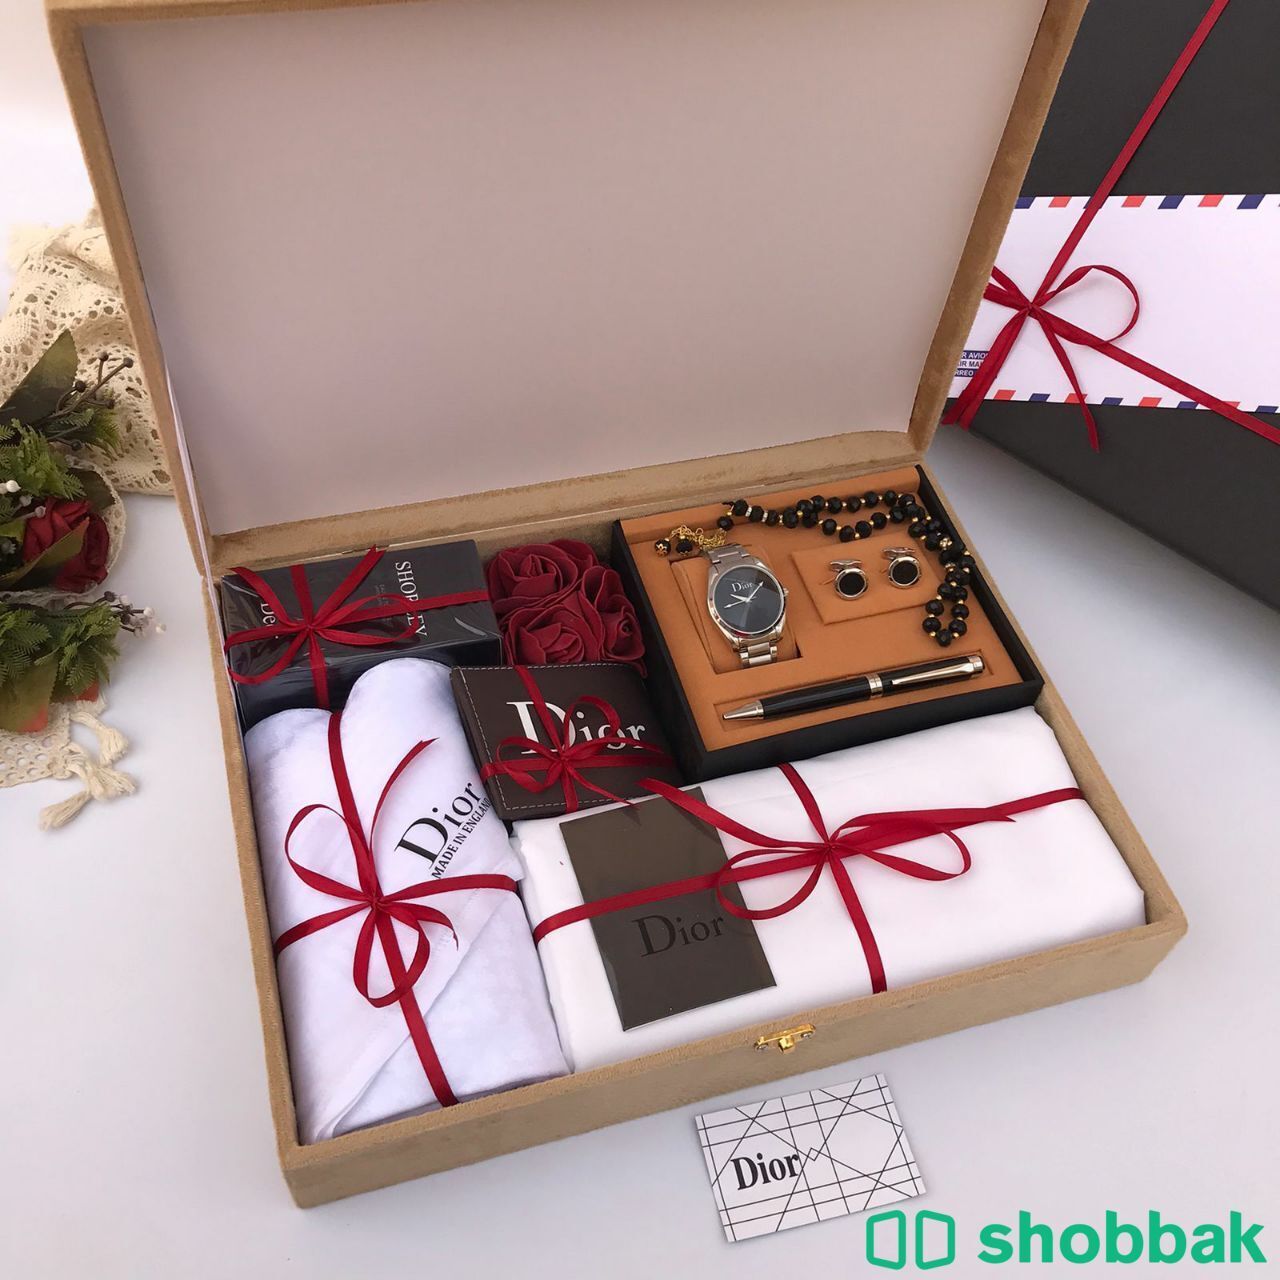 اطقم هدايا العيد رجالي  Shobbak Saudi Arabia